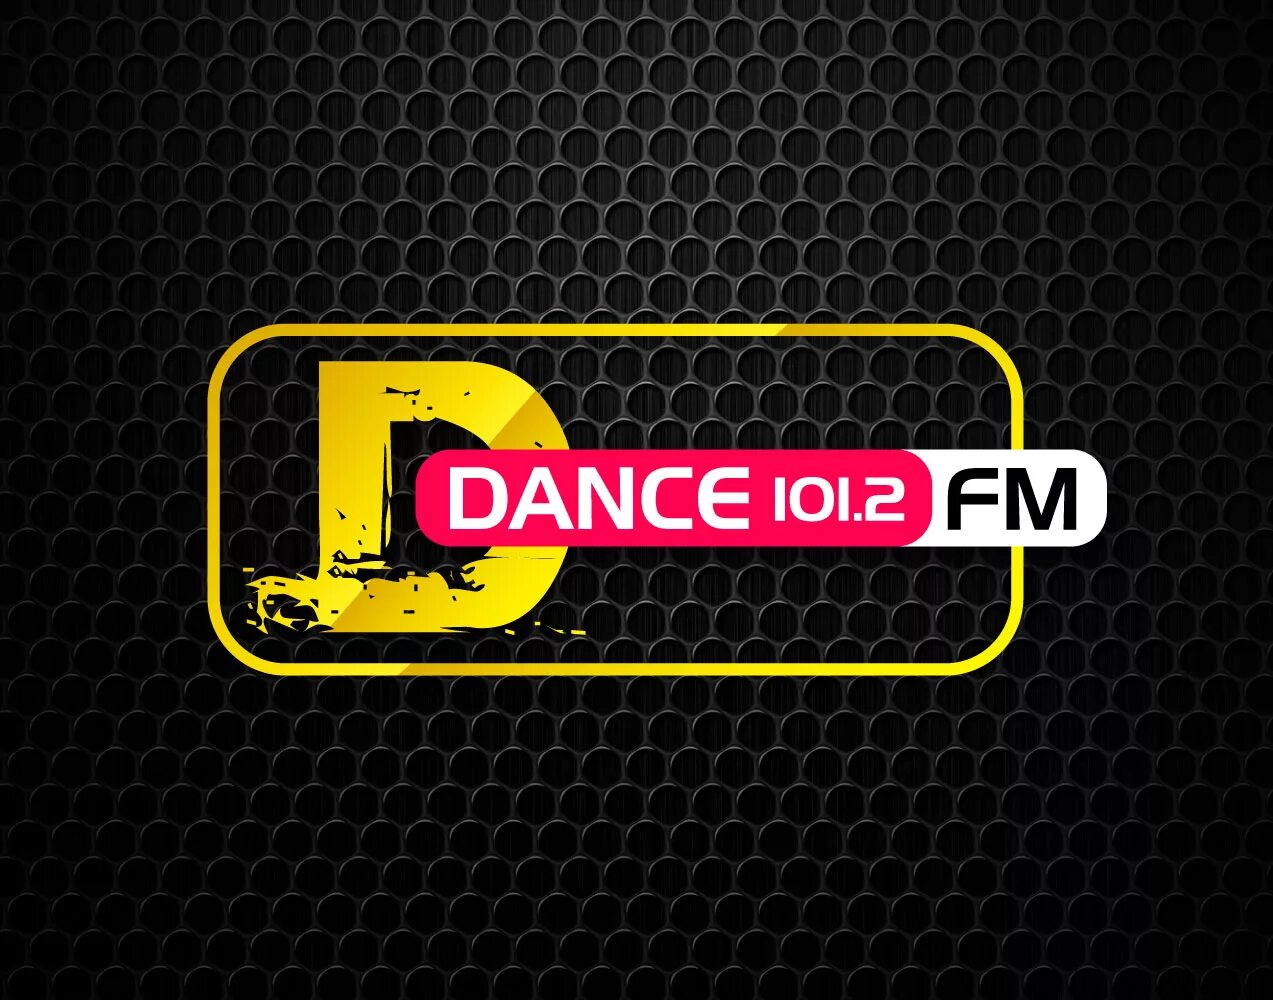 DFM логотип. Логотипы радиостанций ди ФМ. DFM радио лого. Реклама DFM 101.2. Радио ли фм